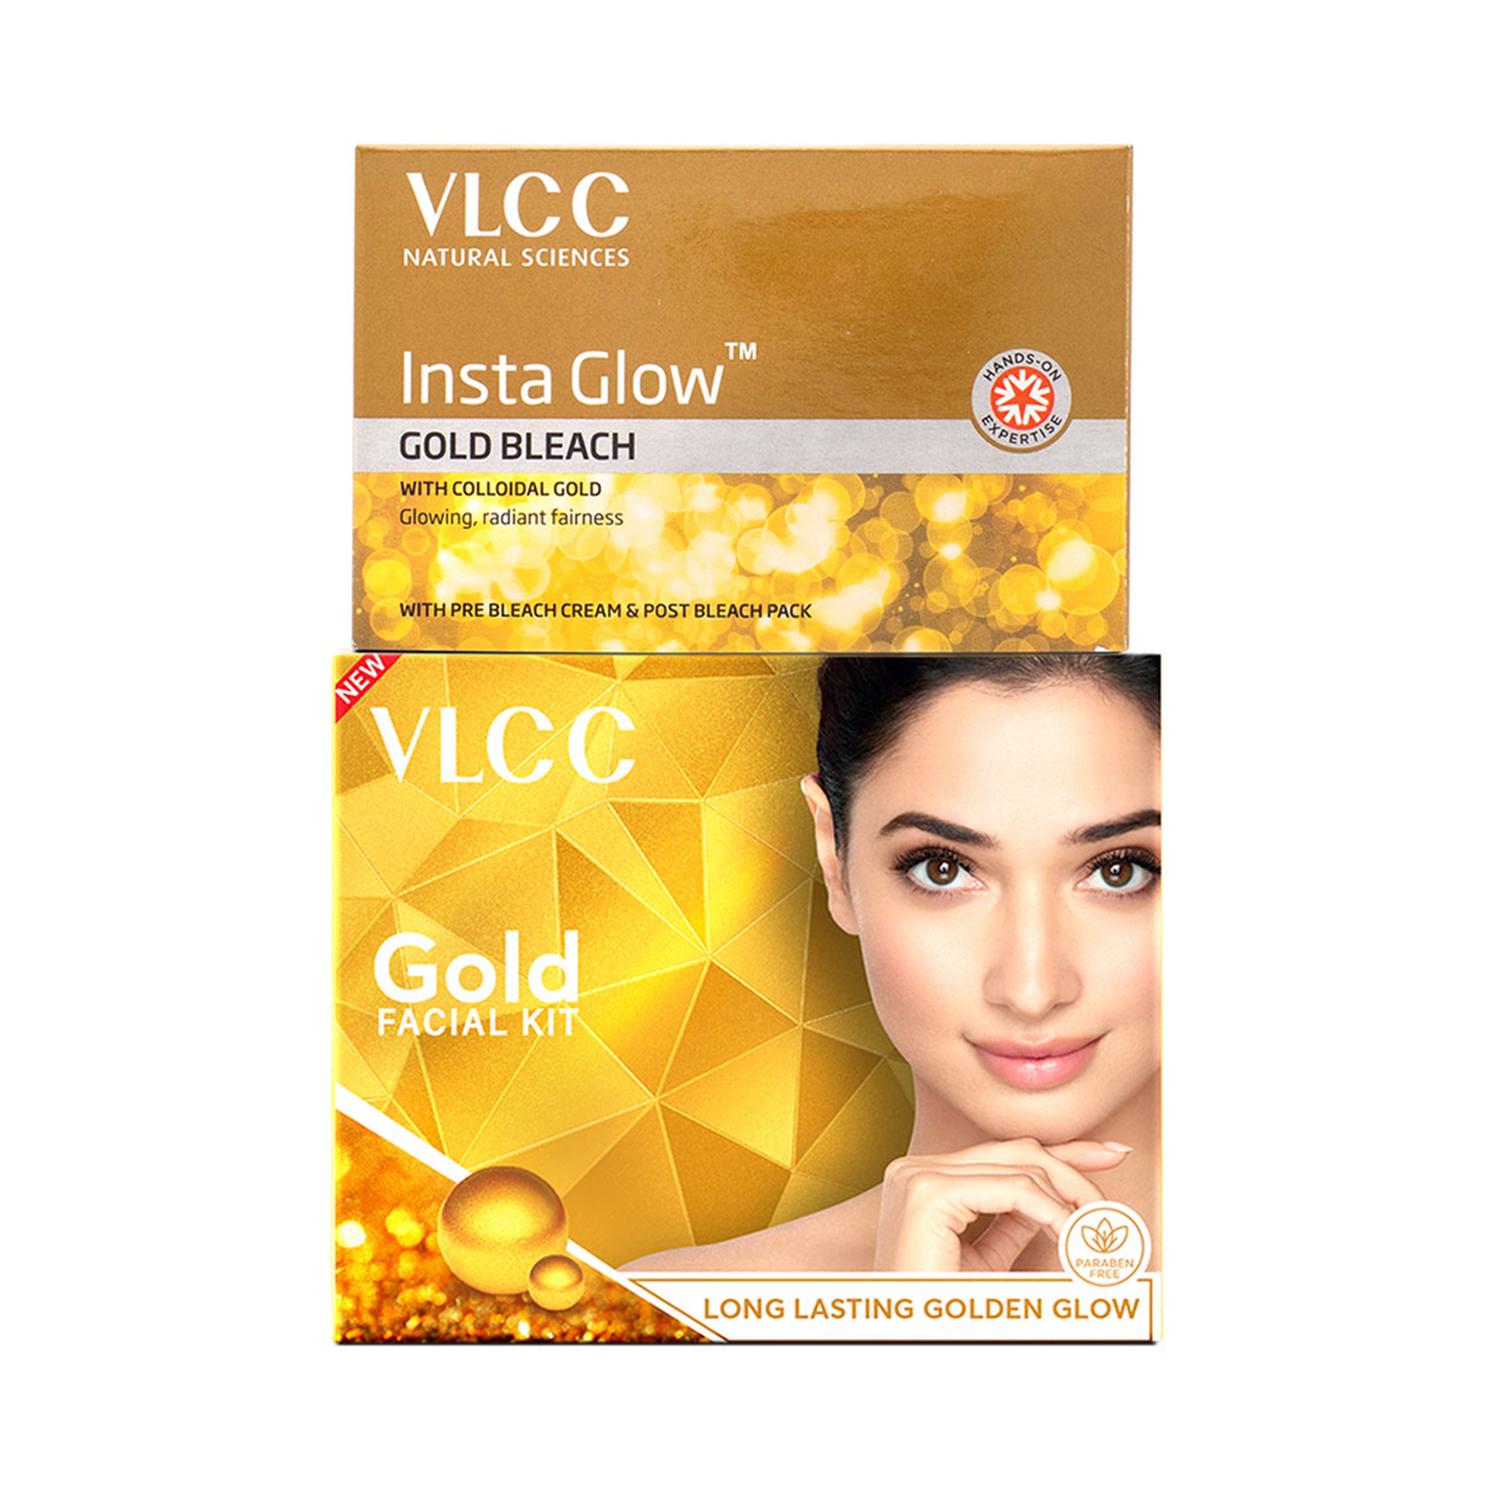 VLCC | VLCC Gold Facial Kit & Insta Glow Gold Bleach Combo